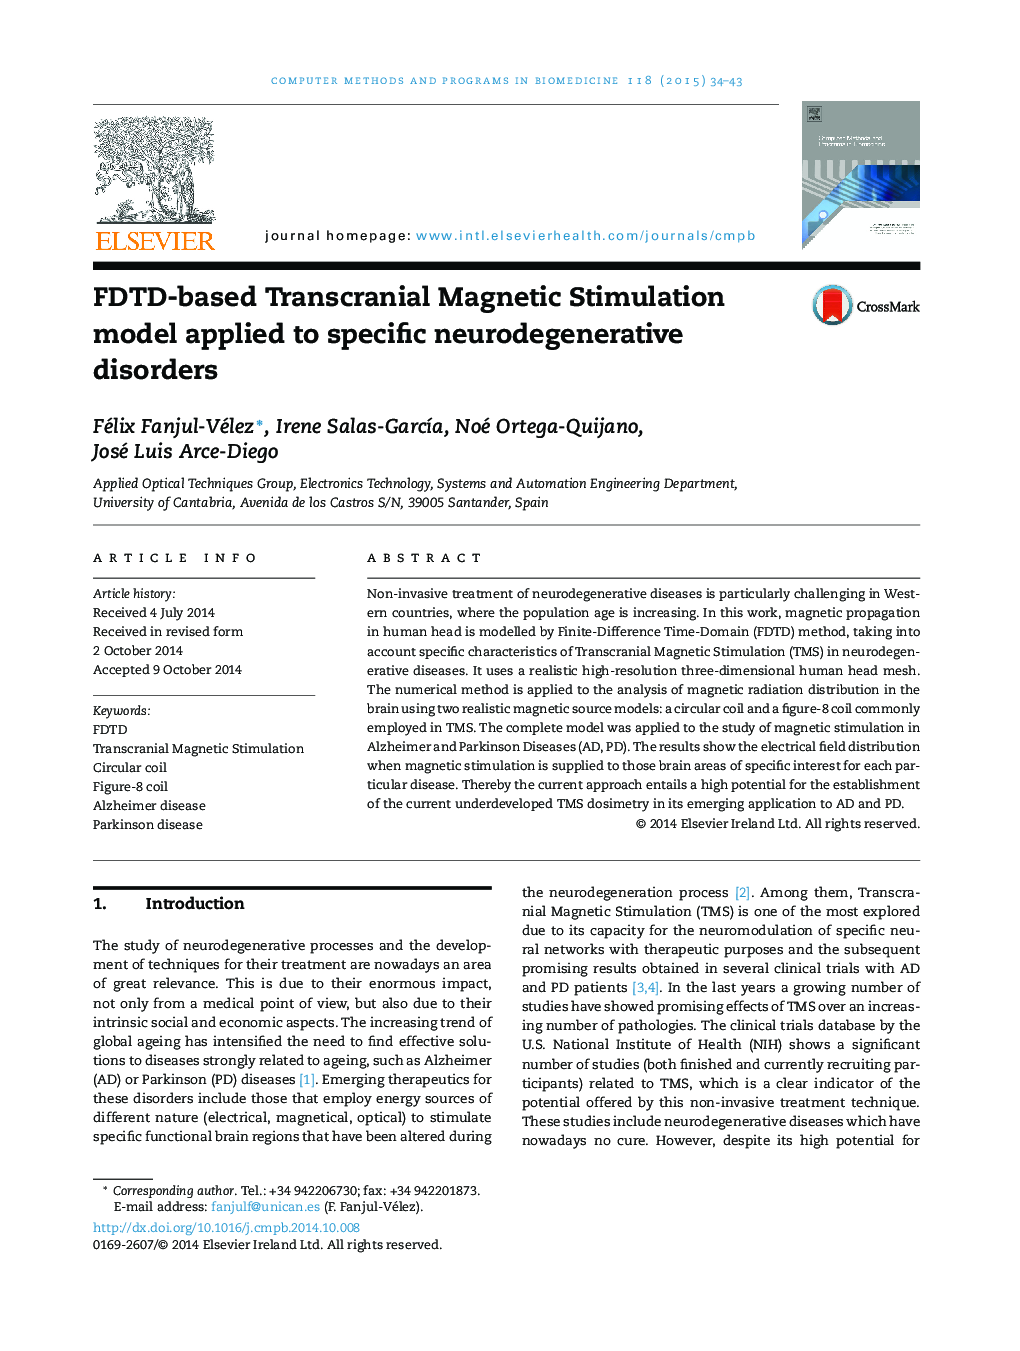 FDTD-based Transcranial Magnetic Stimulation model applied to specific neurodegenerative disorders